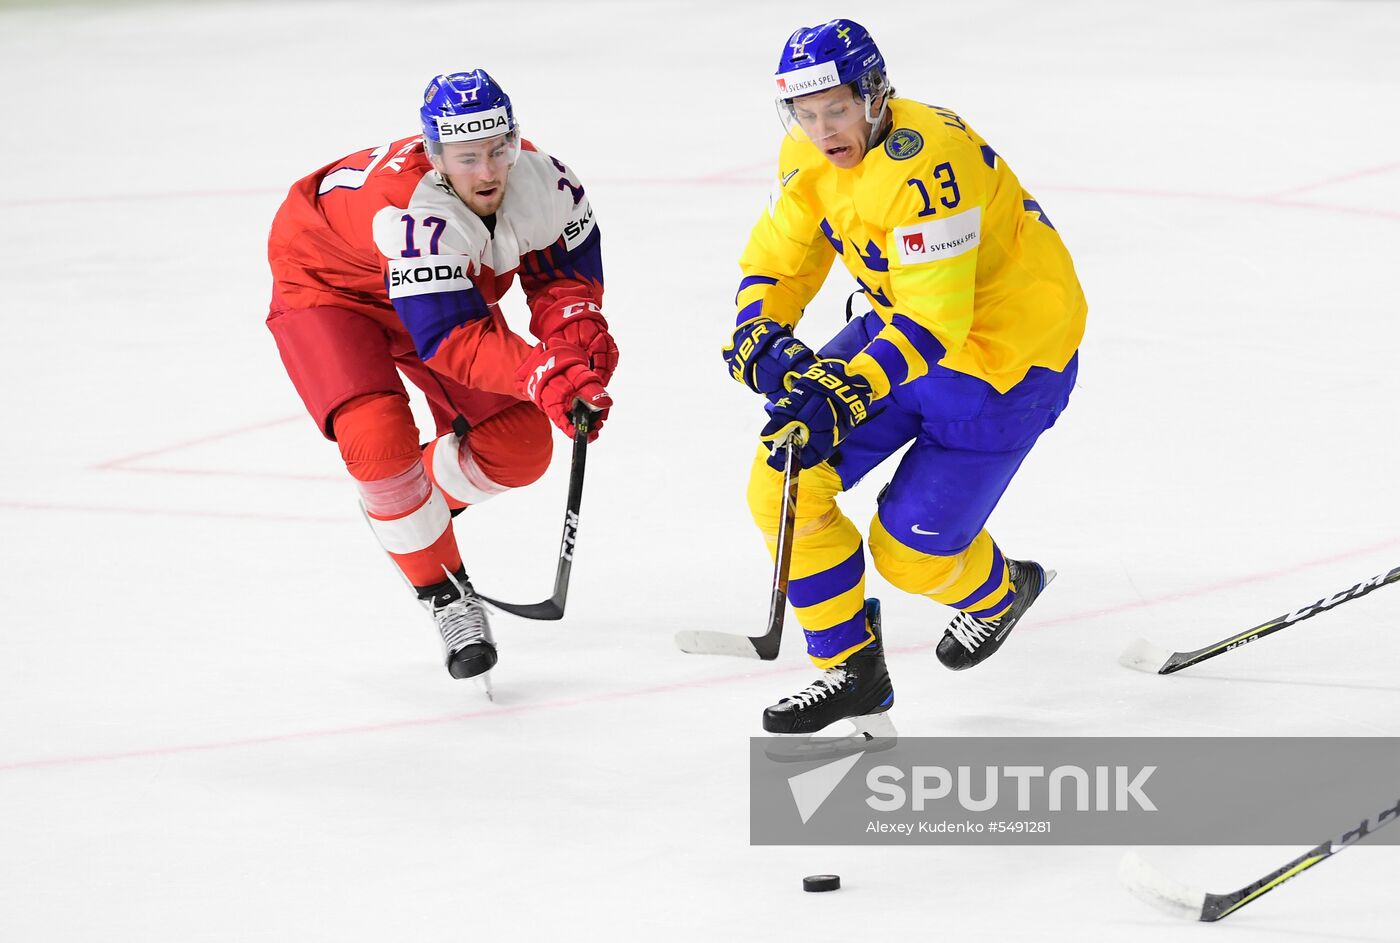 Ice hockey. 2018 IIHF World Championship. Sweden vs. Czech Republic